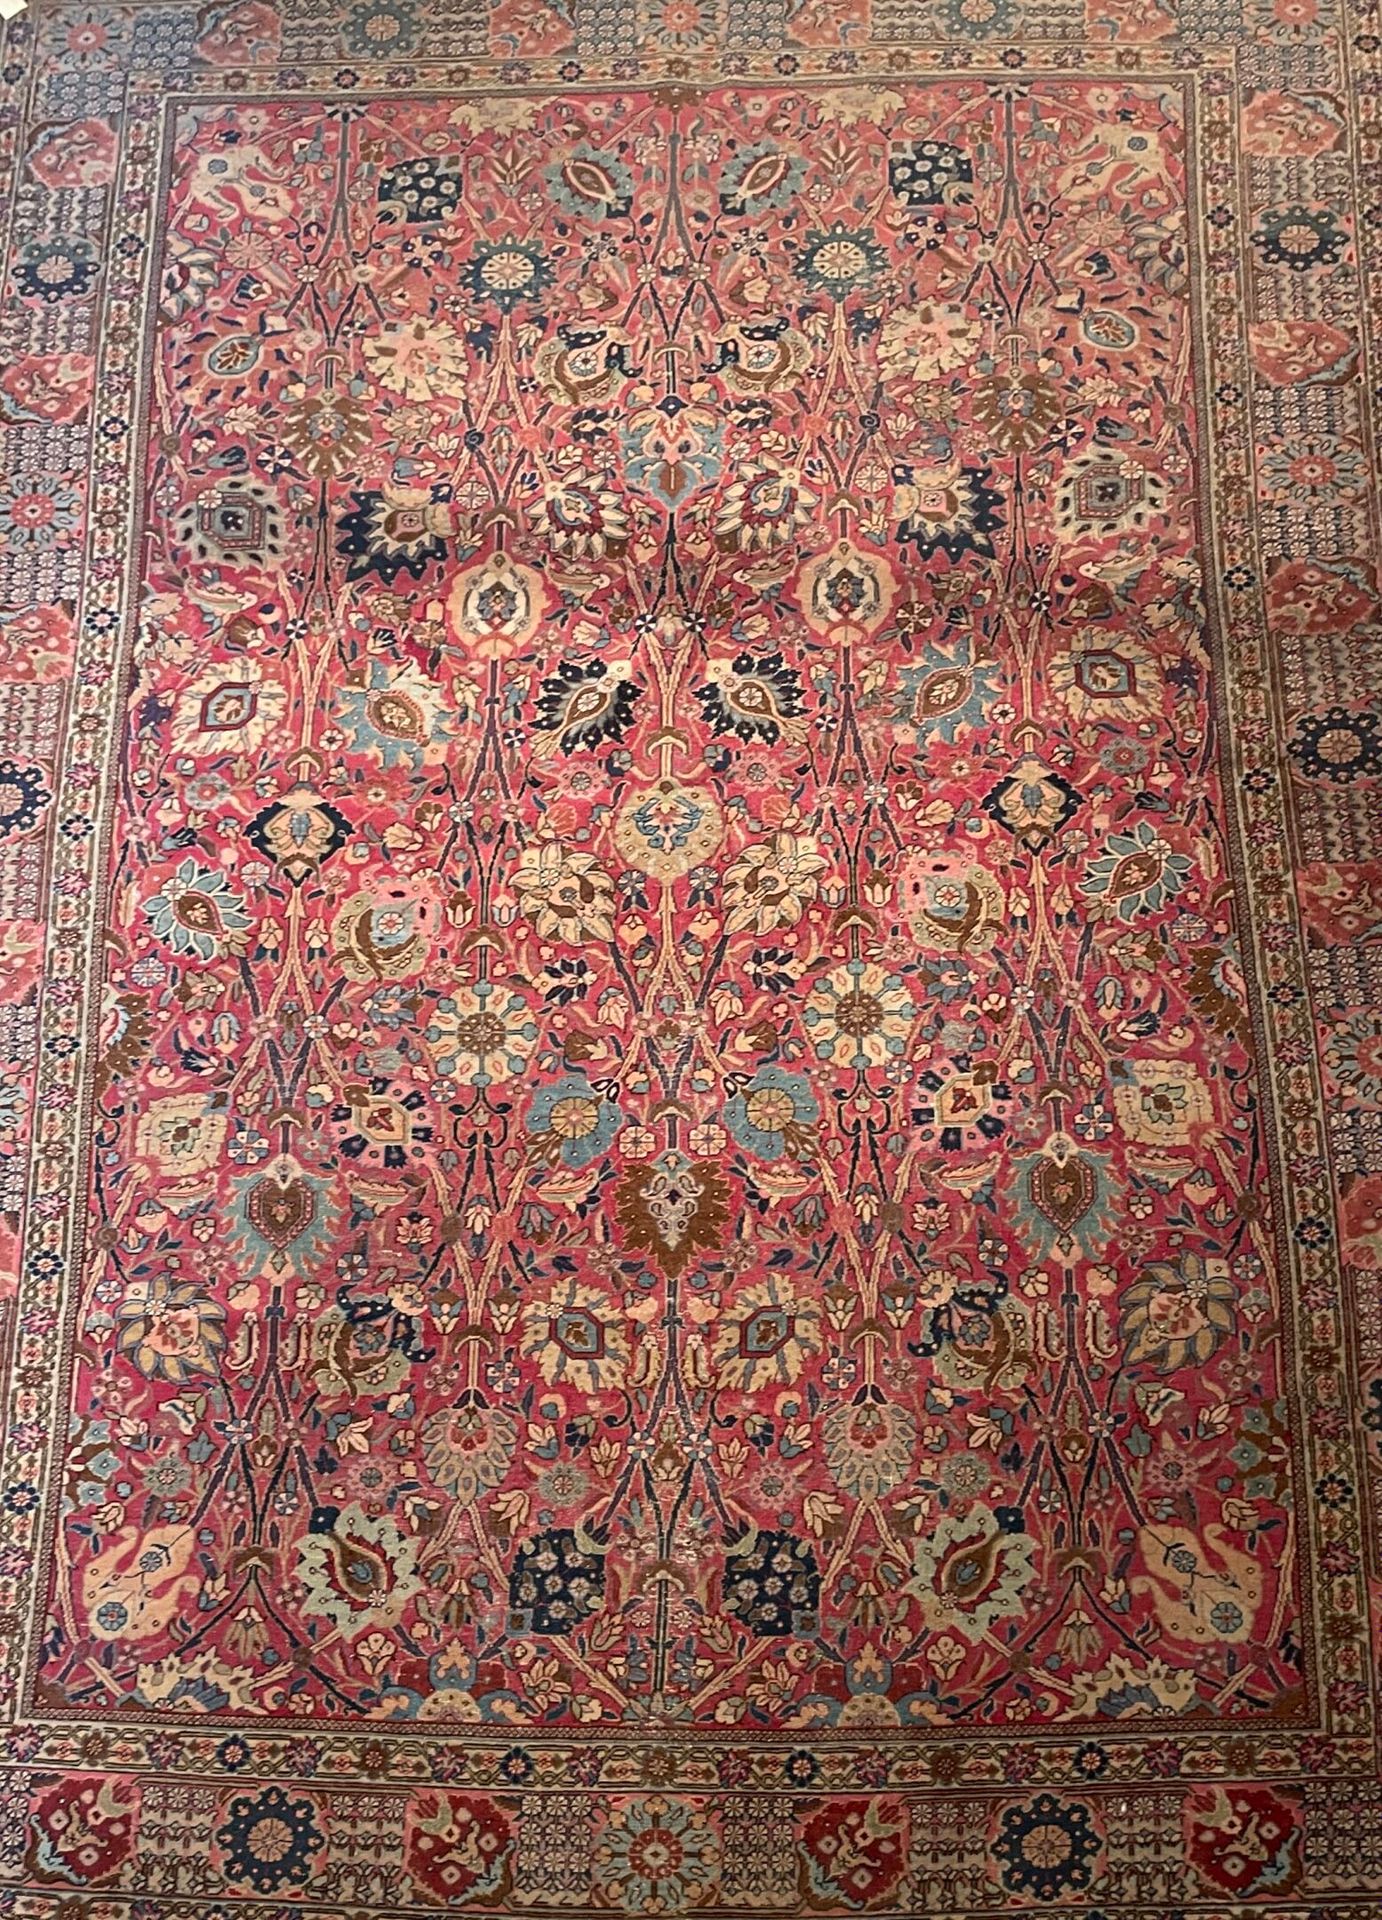 Null NORTHWEST IRAN - 20th CENTURY
Carpet with classic "vase" and floral lattice&hellip;